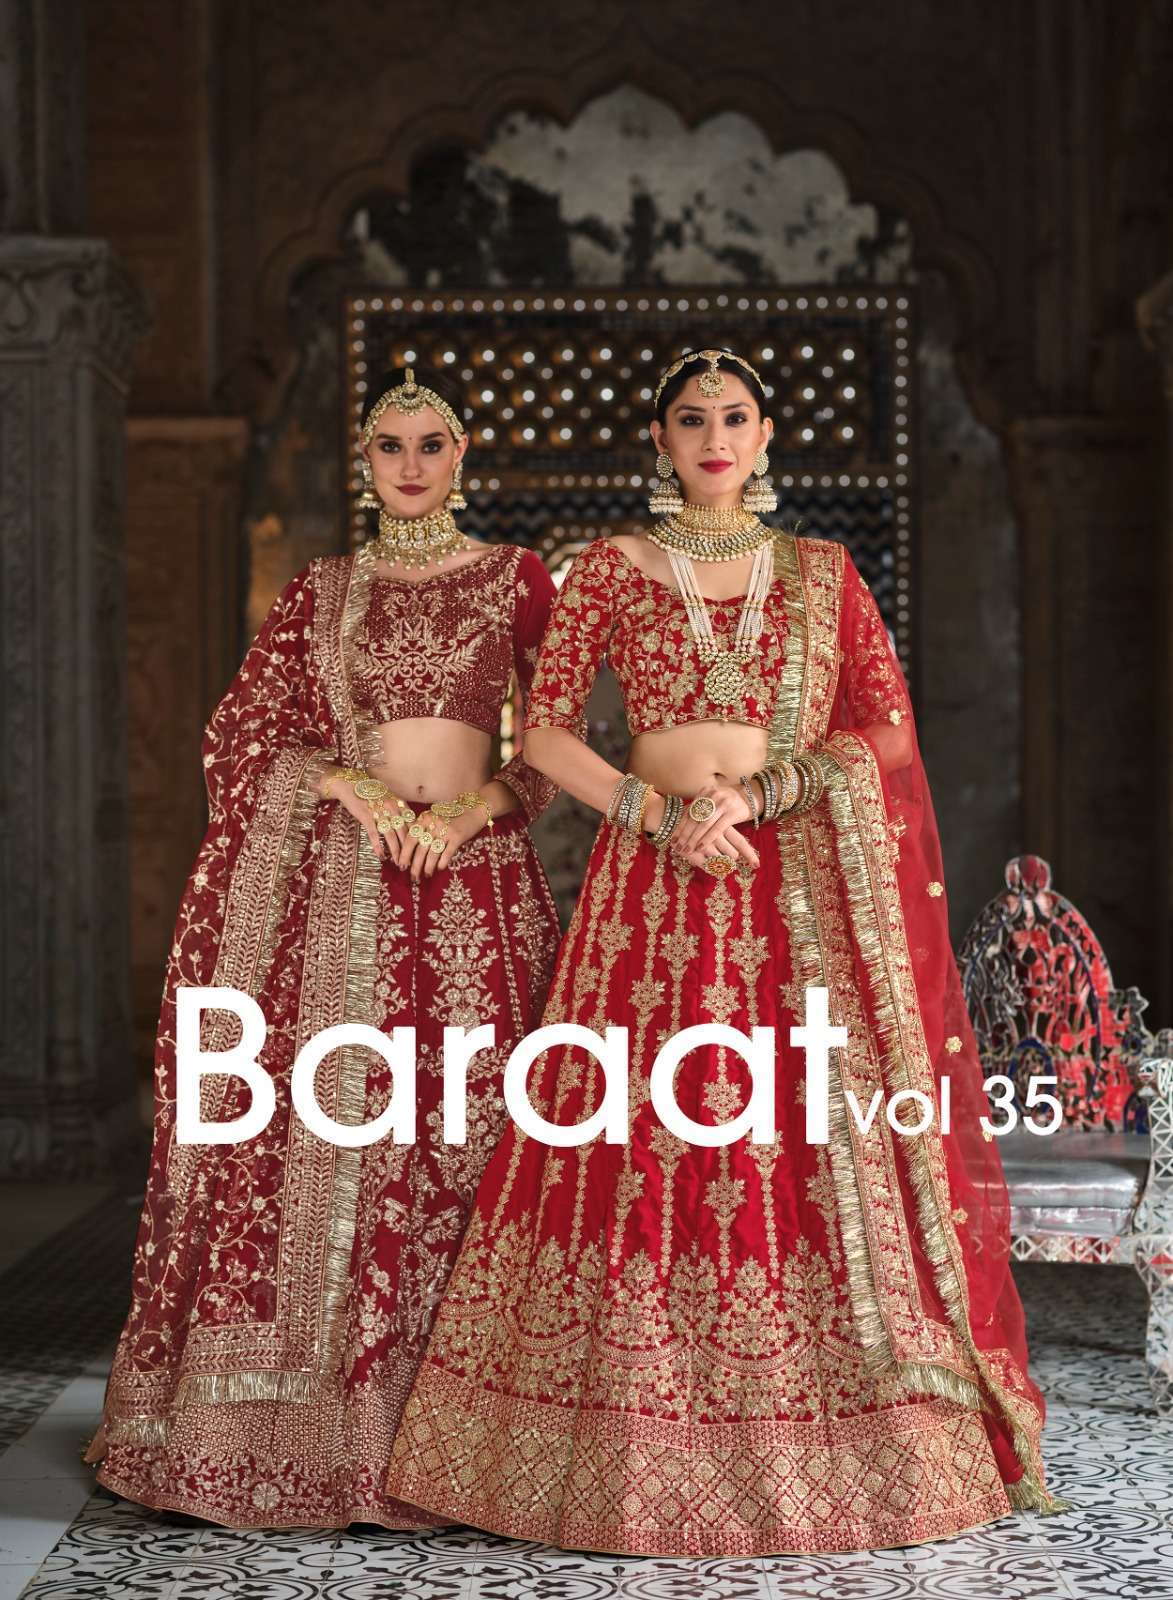 Senhora presents Baraat bridal heritage vol-35 heavy velvet wedding wear Lahenga choli collection 